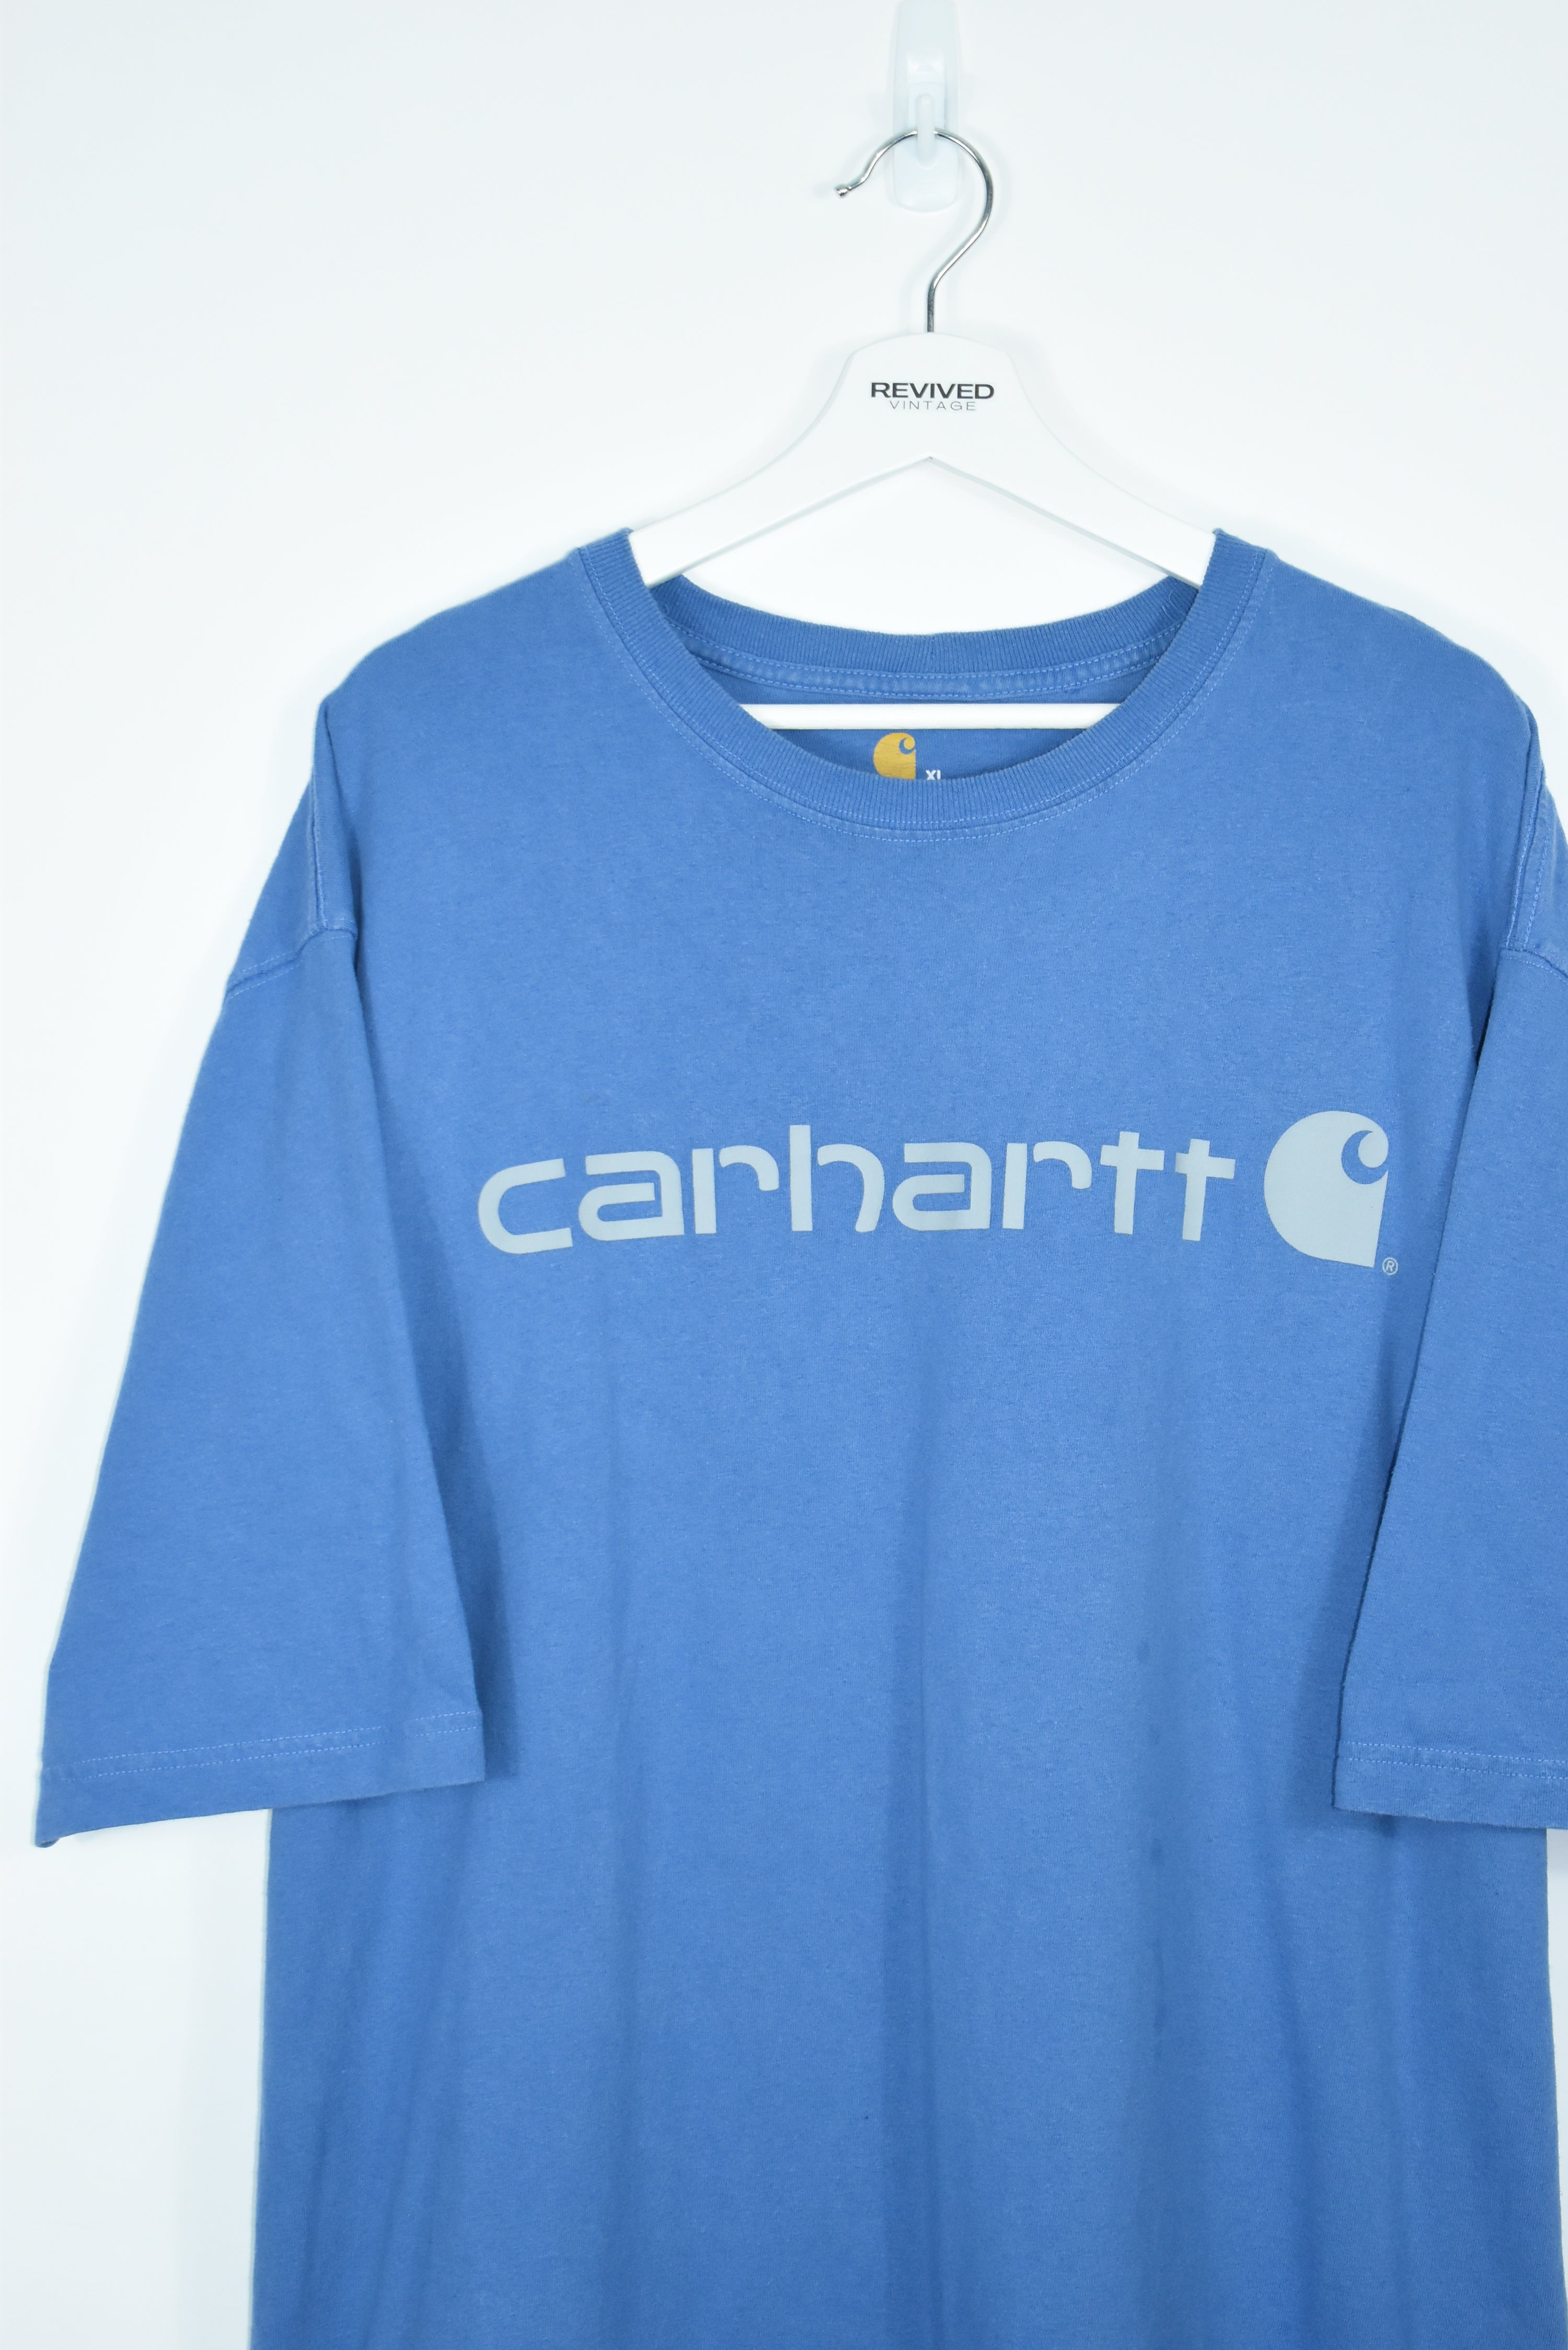 Vintage Carhartt Spellout T Shirt Xlarge